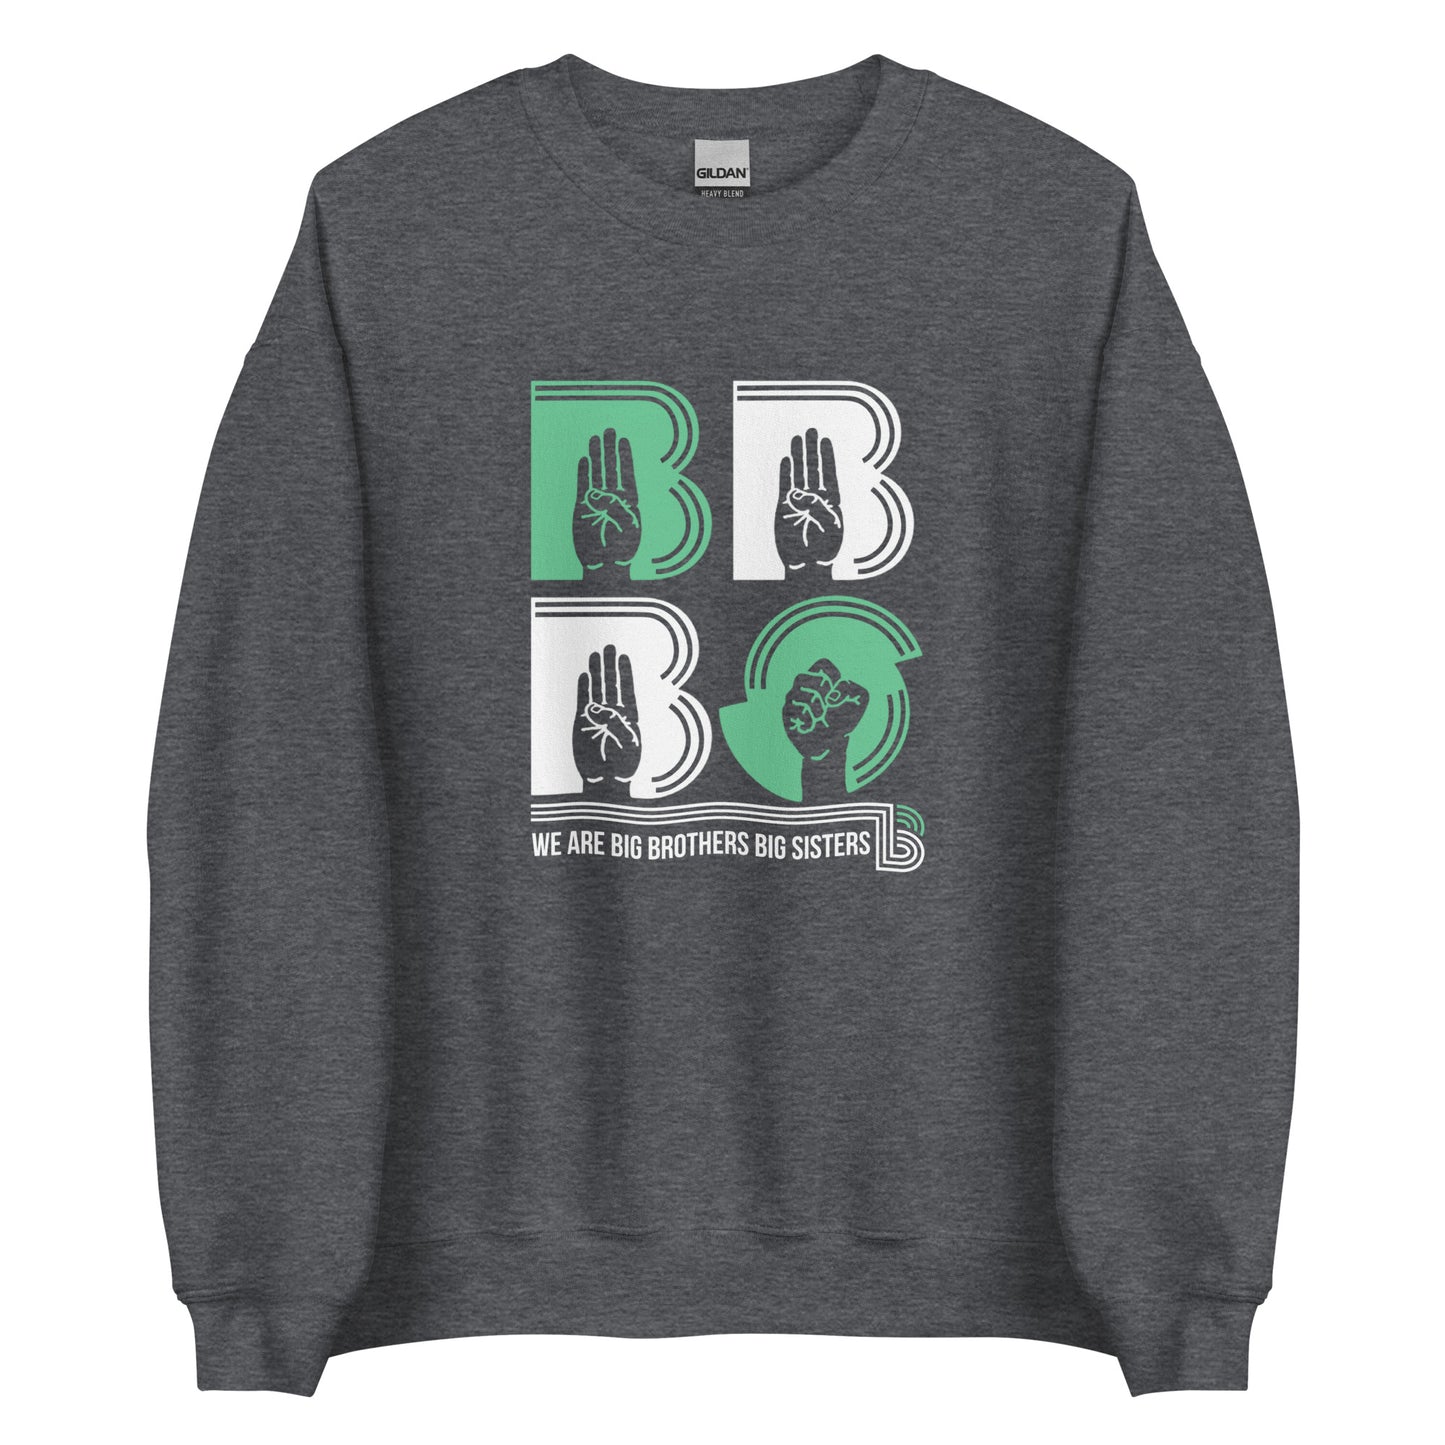 BBBS - We Are Big Brothers Big Sisters Sweatshirt